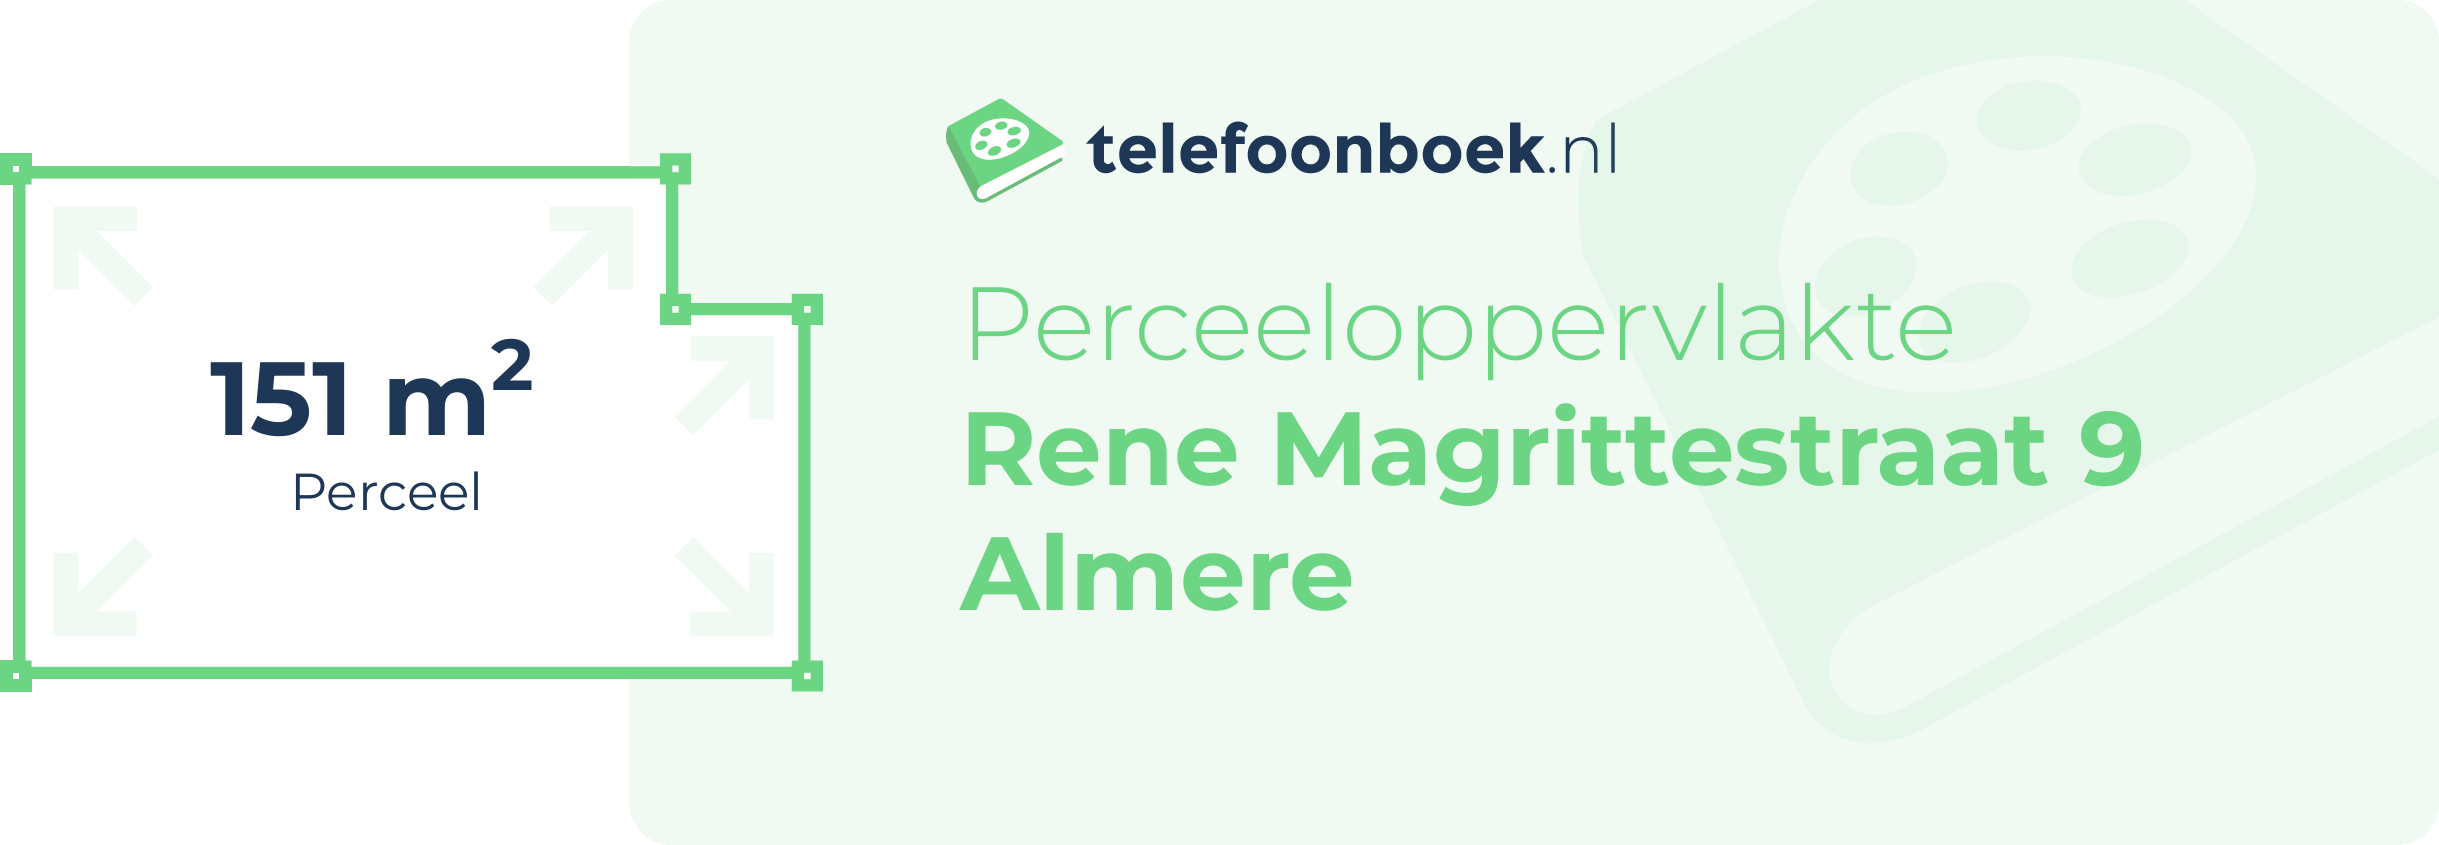 Perceeloppervlakte Rene Magrittestraat 9 Almere